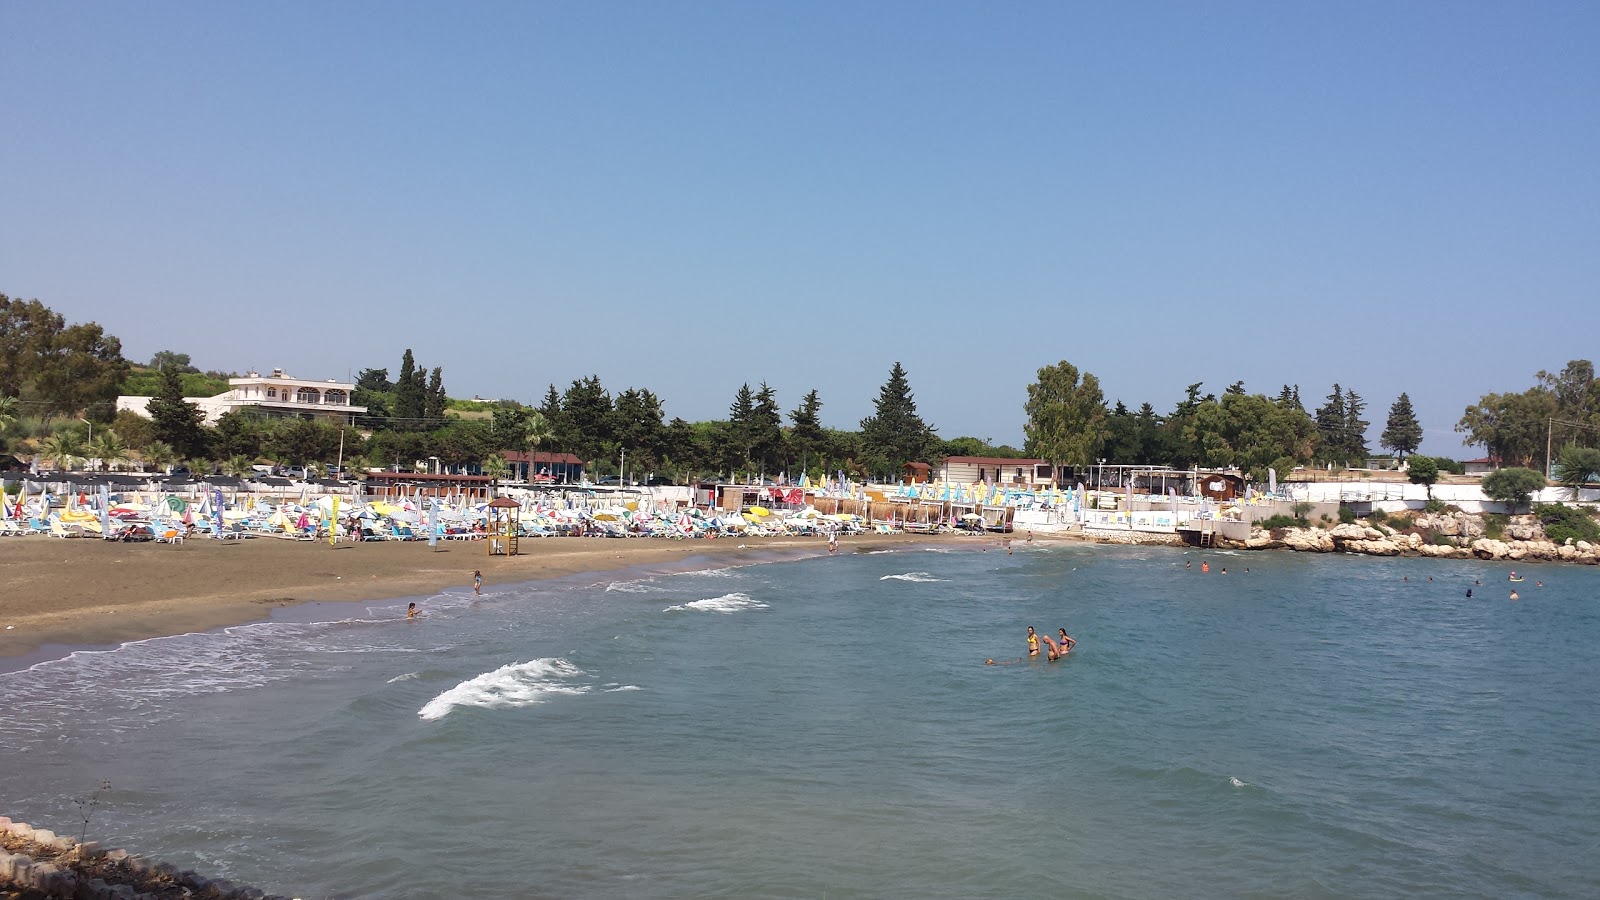 Photo of Queenaba beach beach resort area